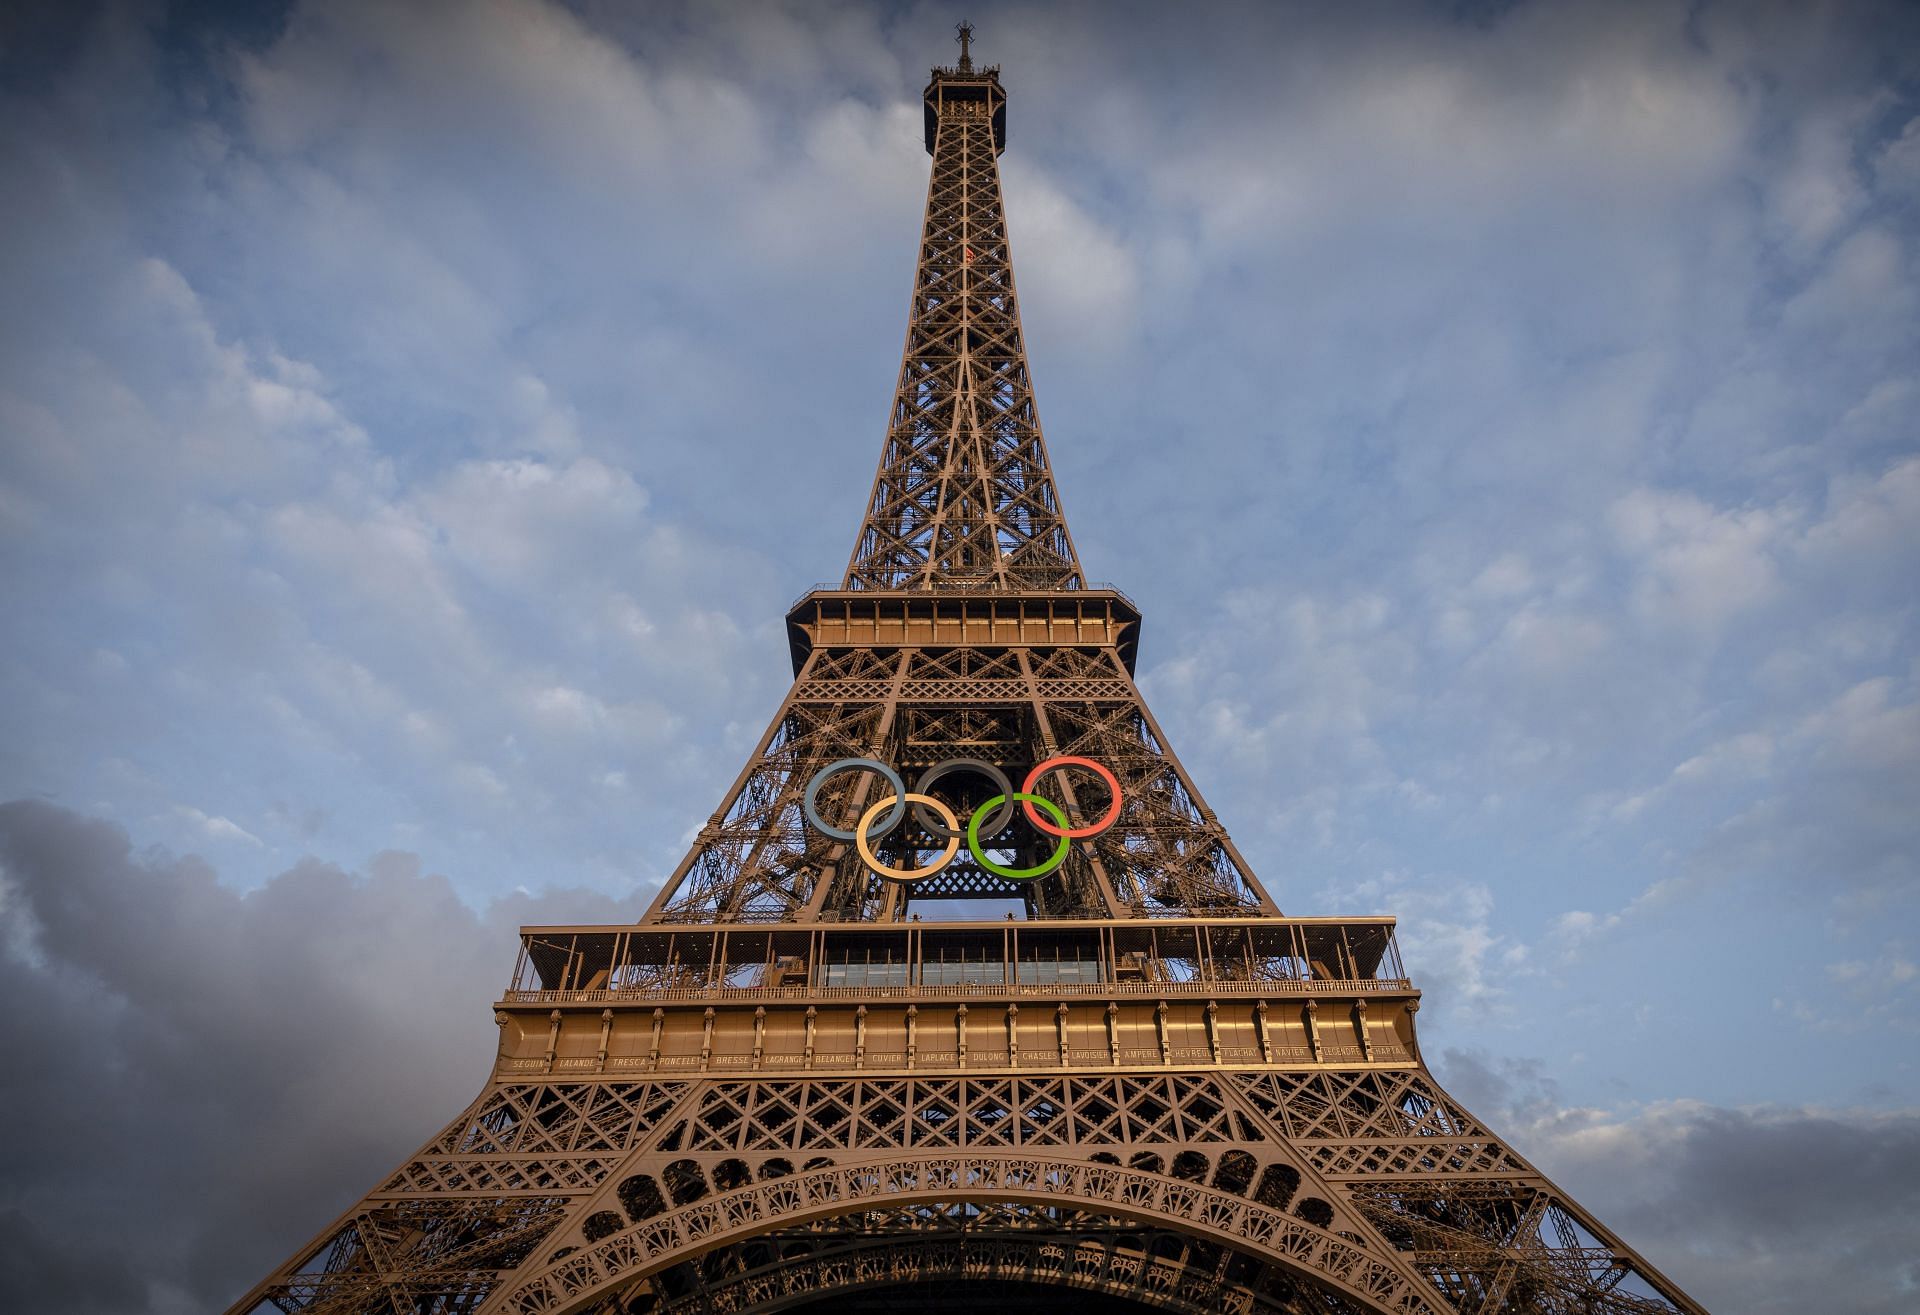 Olympic Rings On Eiffel Tower Herald Paris 2024 Games